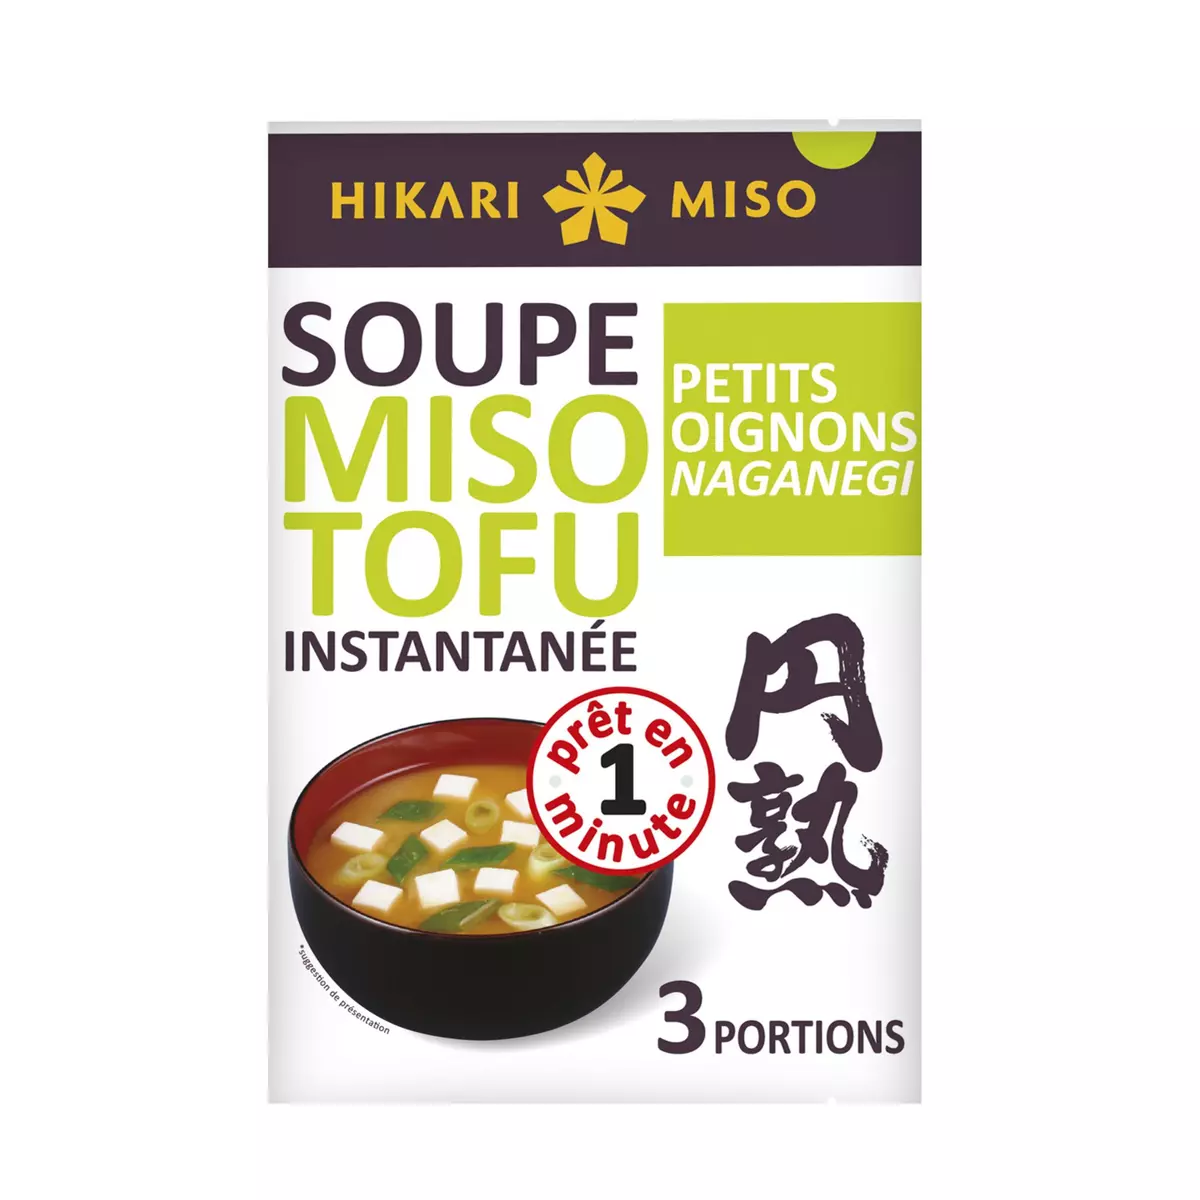 HIKARI Soupe miso tofu instantanée aux petits oignons 58g